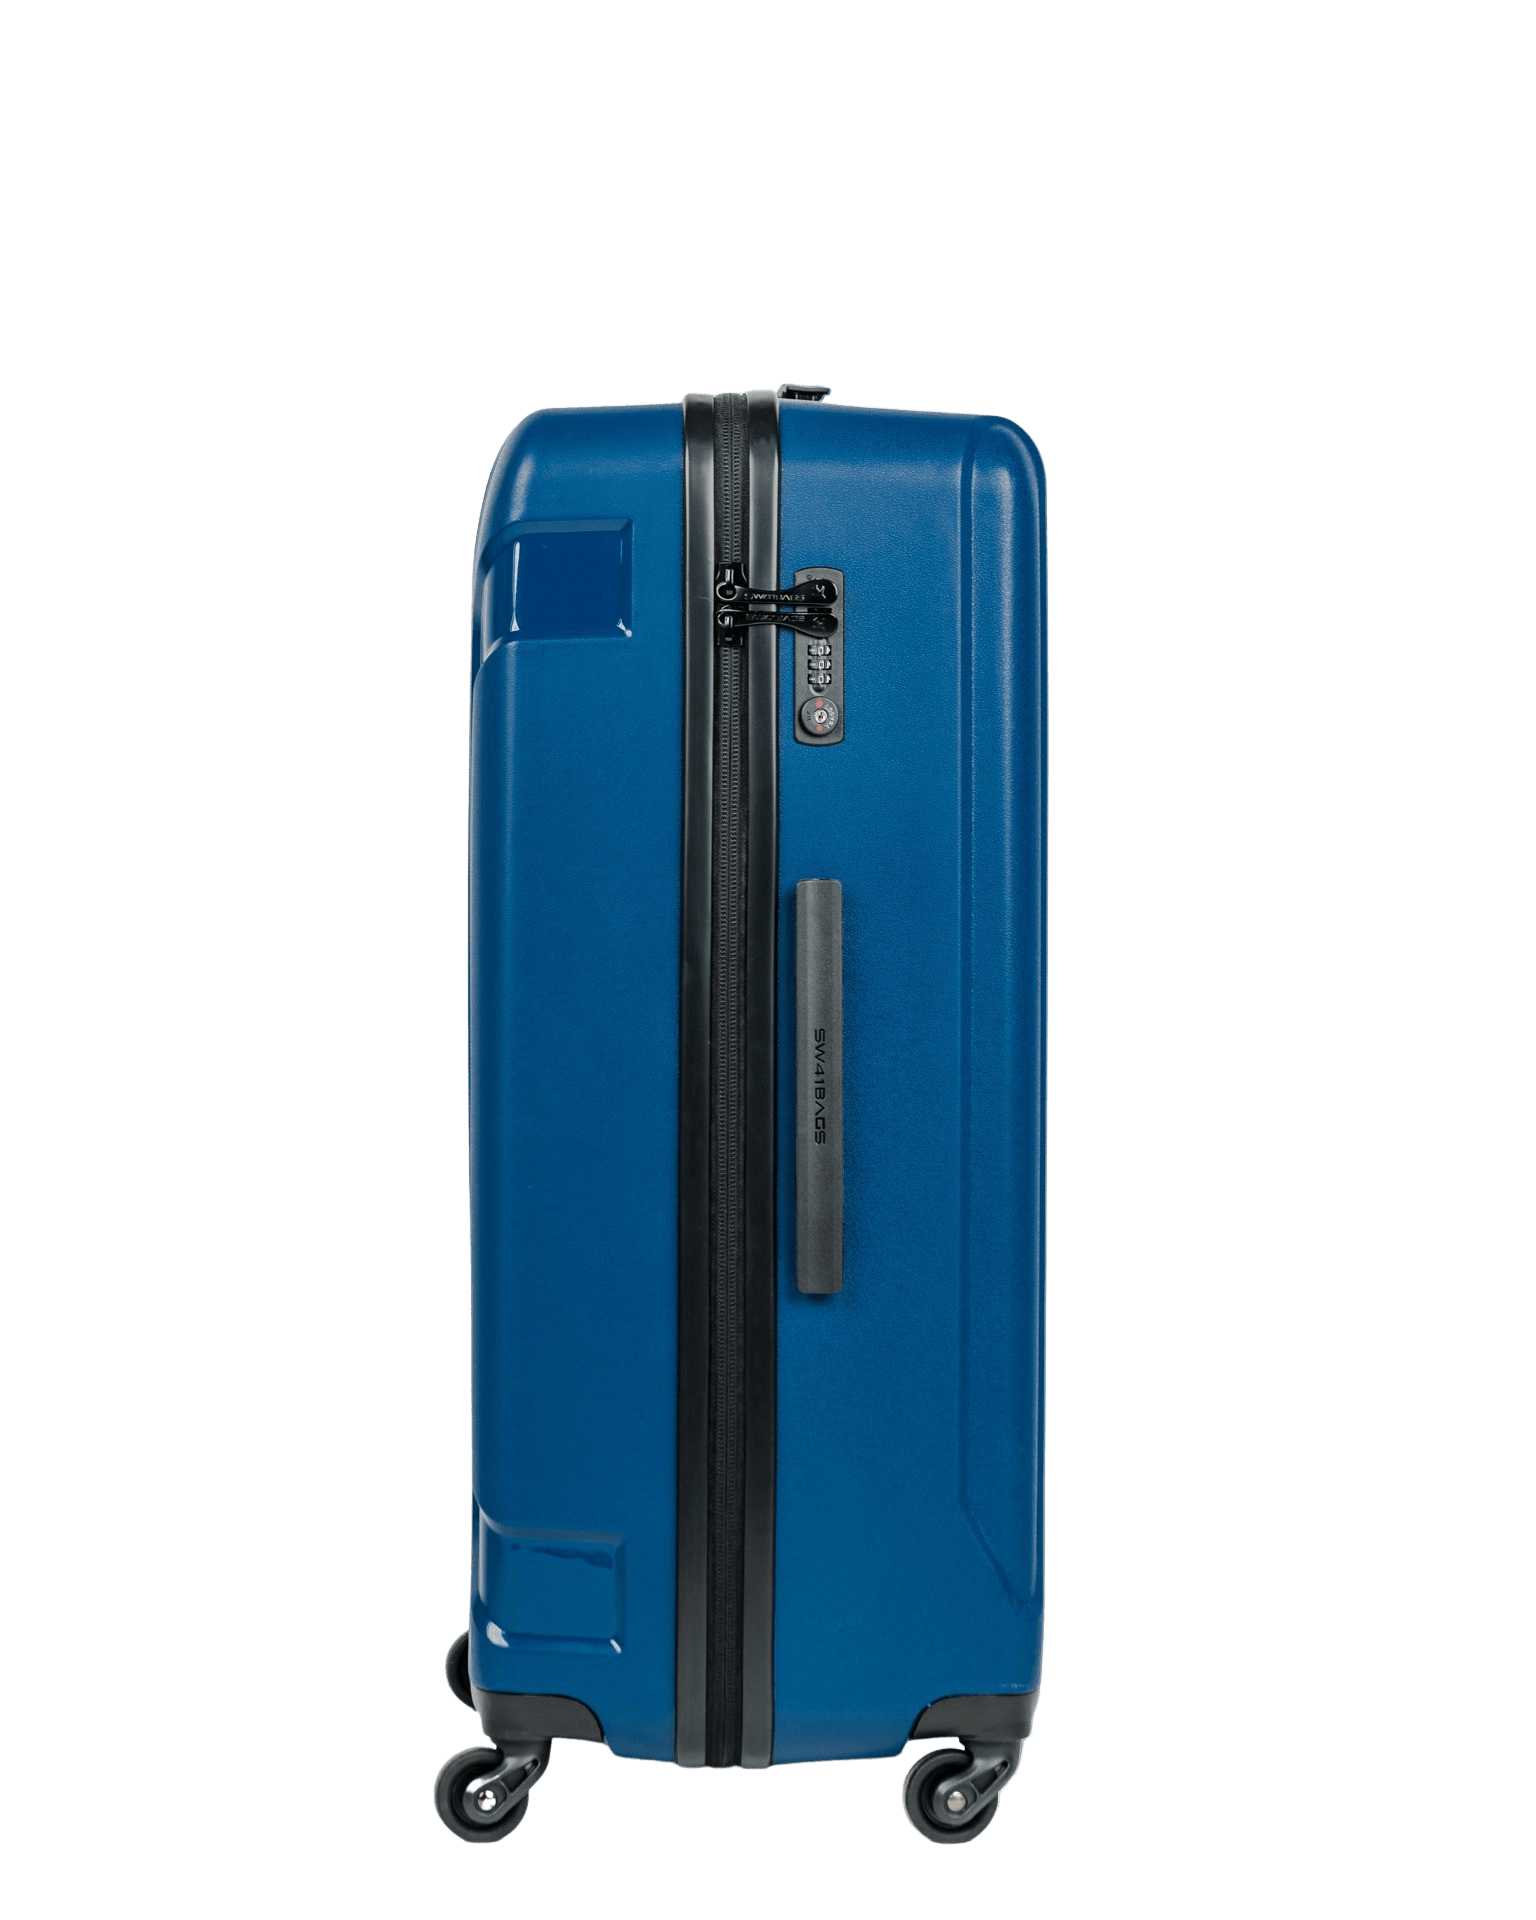 Tourist - Grösse L 75cm - Swissbags: Travel Bags, Luggage, Accessories -  Vouvry, Switzerland - Travel Bags, Luggage, Accessories - Vouvry,  Switzerland